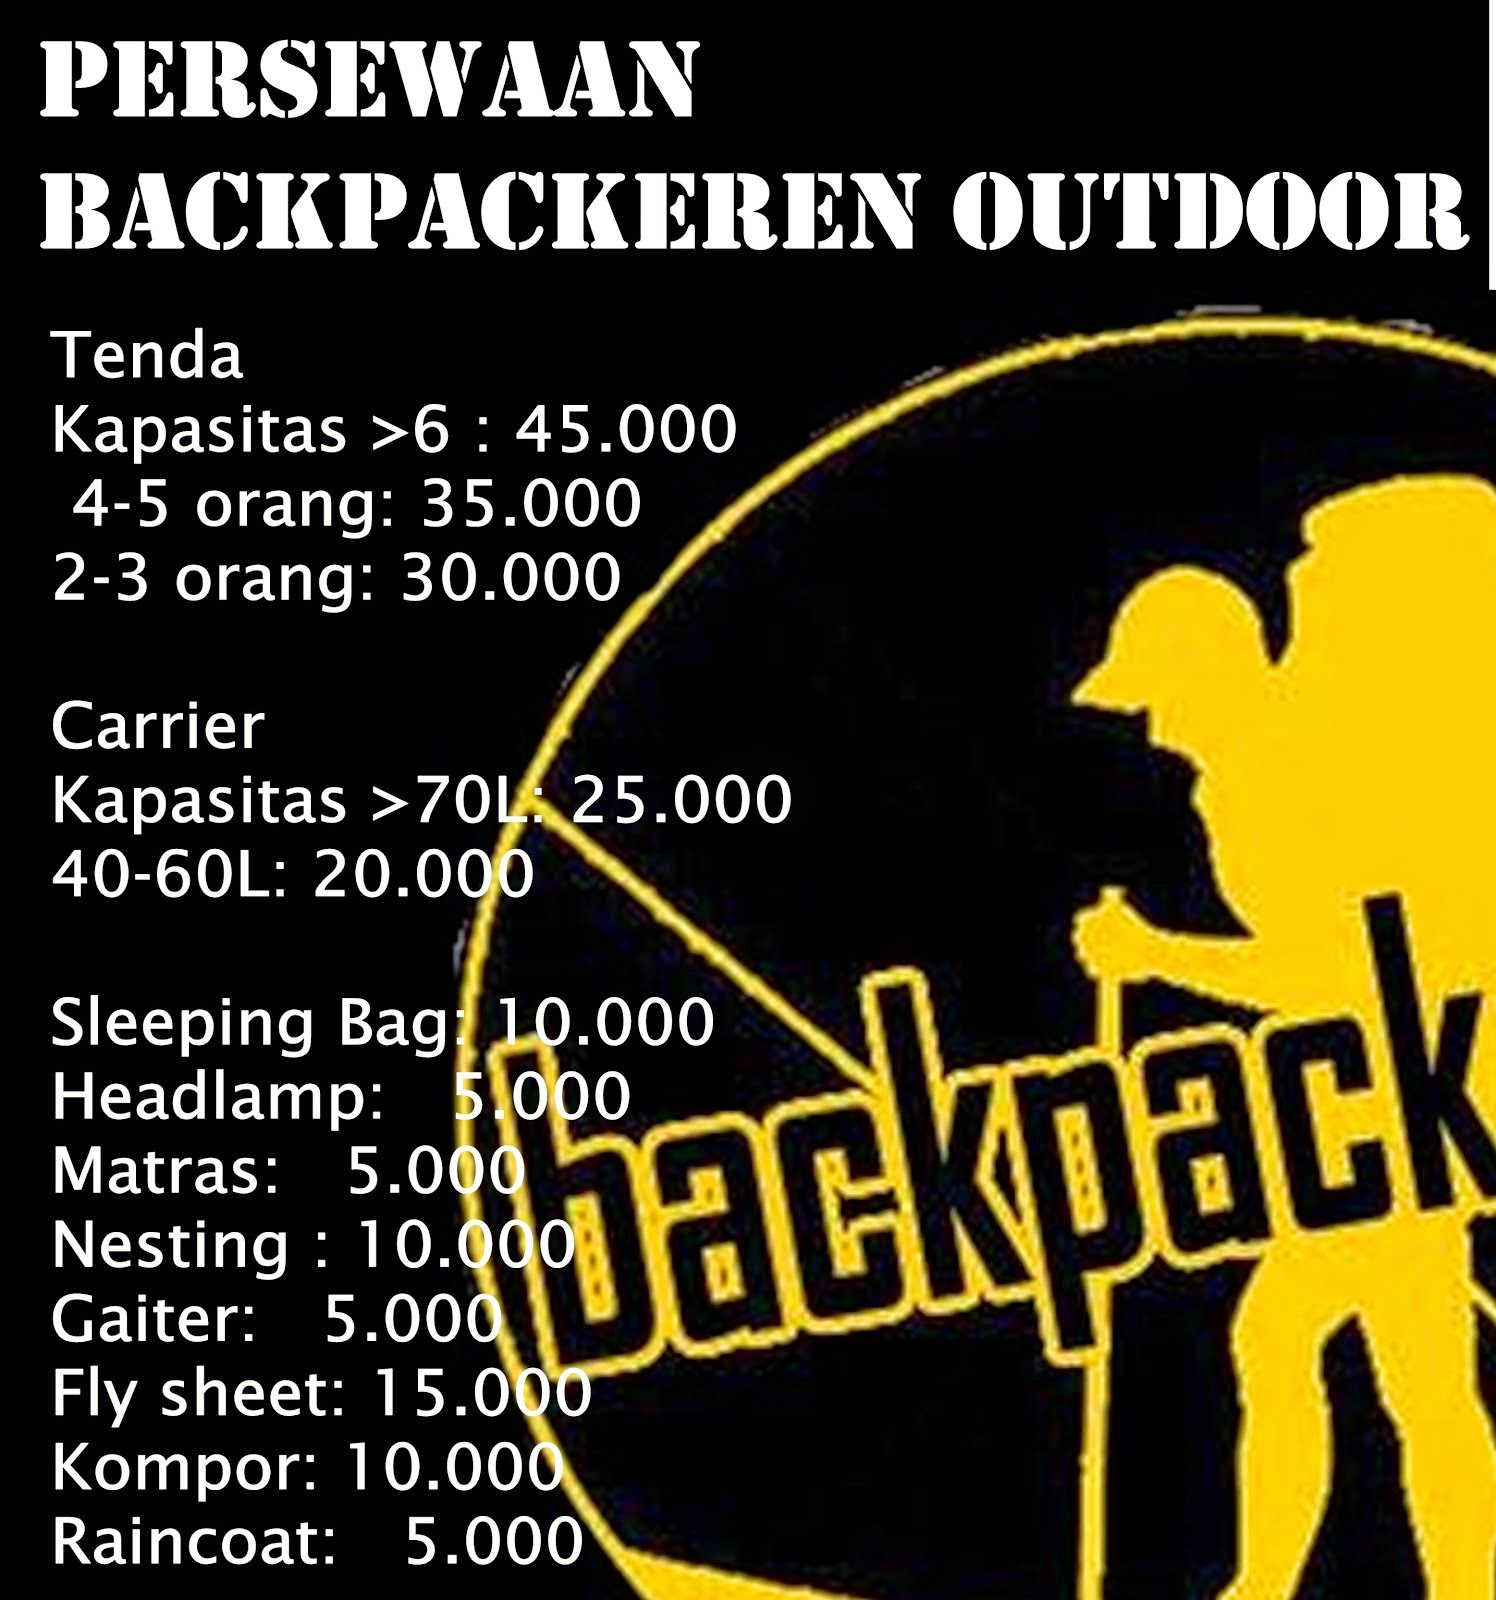 Backpackerent